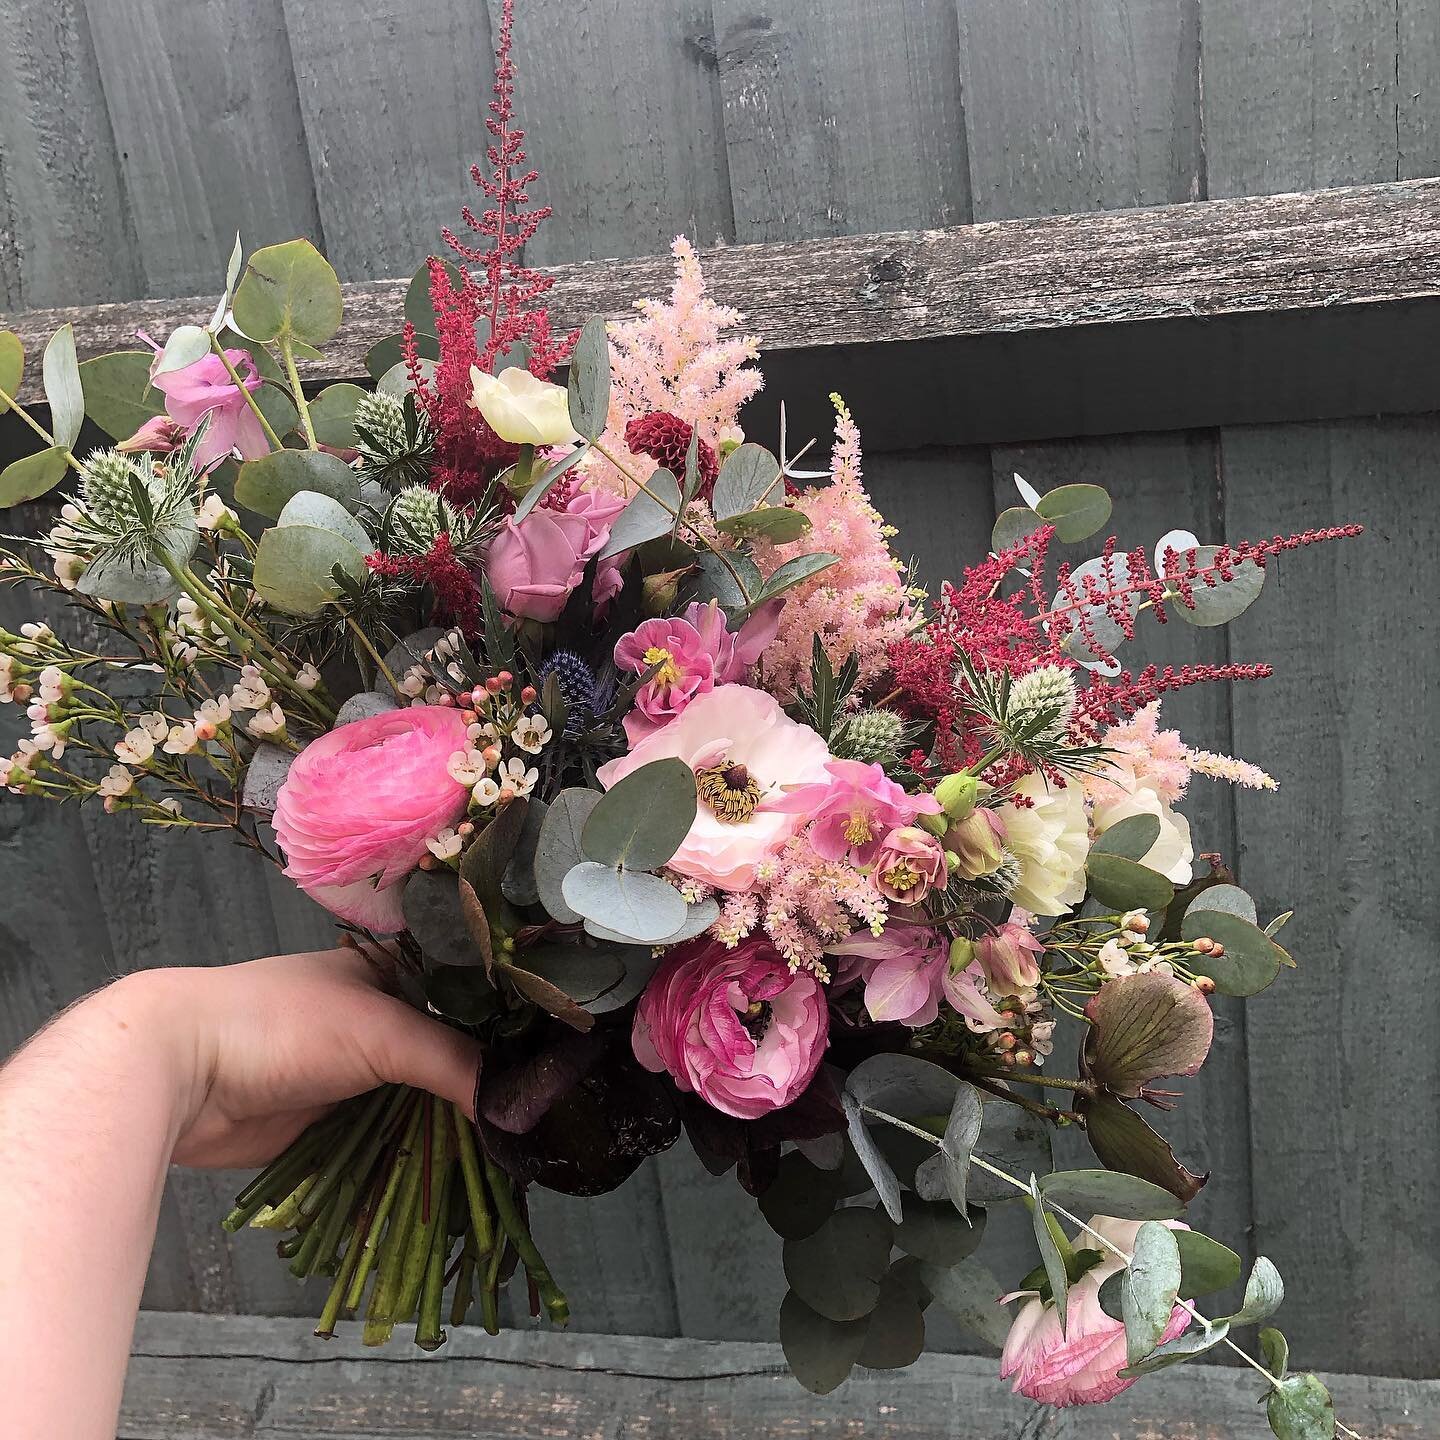 This weekend&rsquo;s wedding bouquet for Jess 🥰

Venue @cotonhousefarm 

#weddingbouquet
#weddinginspo
#weddingday
#wildgardenstyle
#bridalbouquet
#dreamyflorals
#underthefloralspell